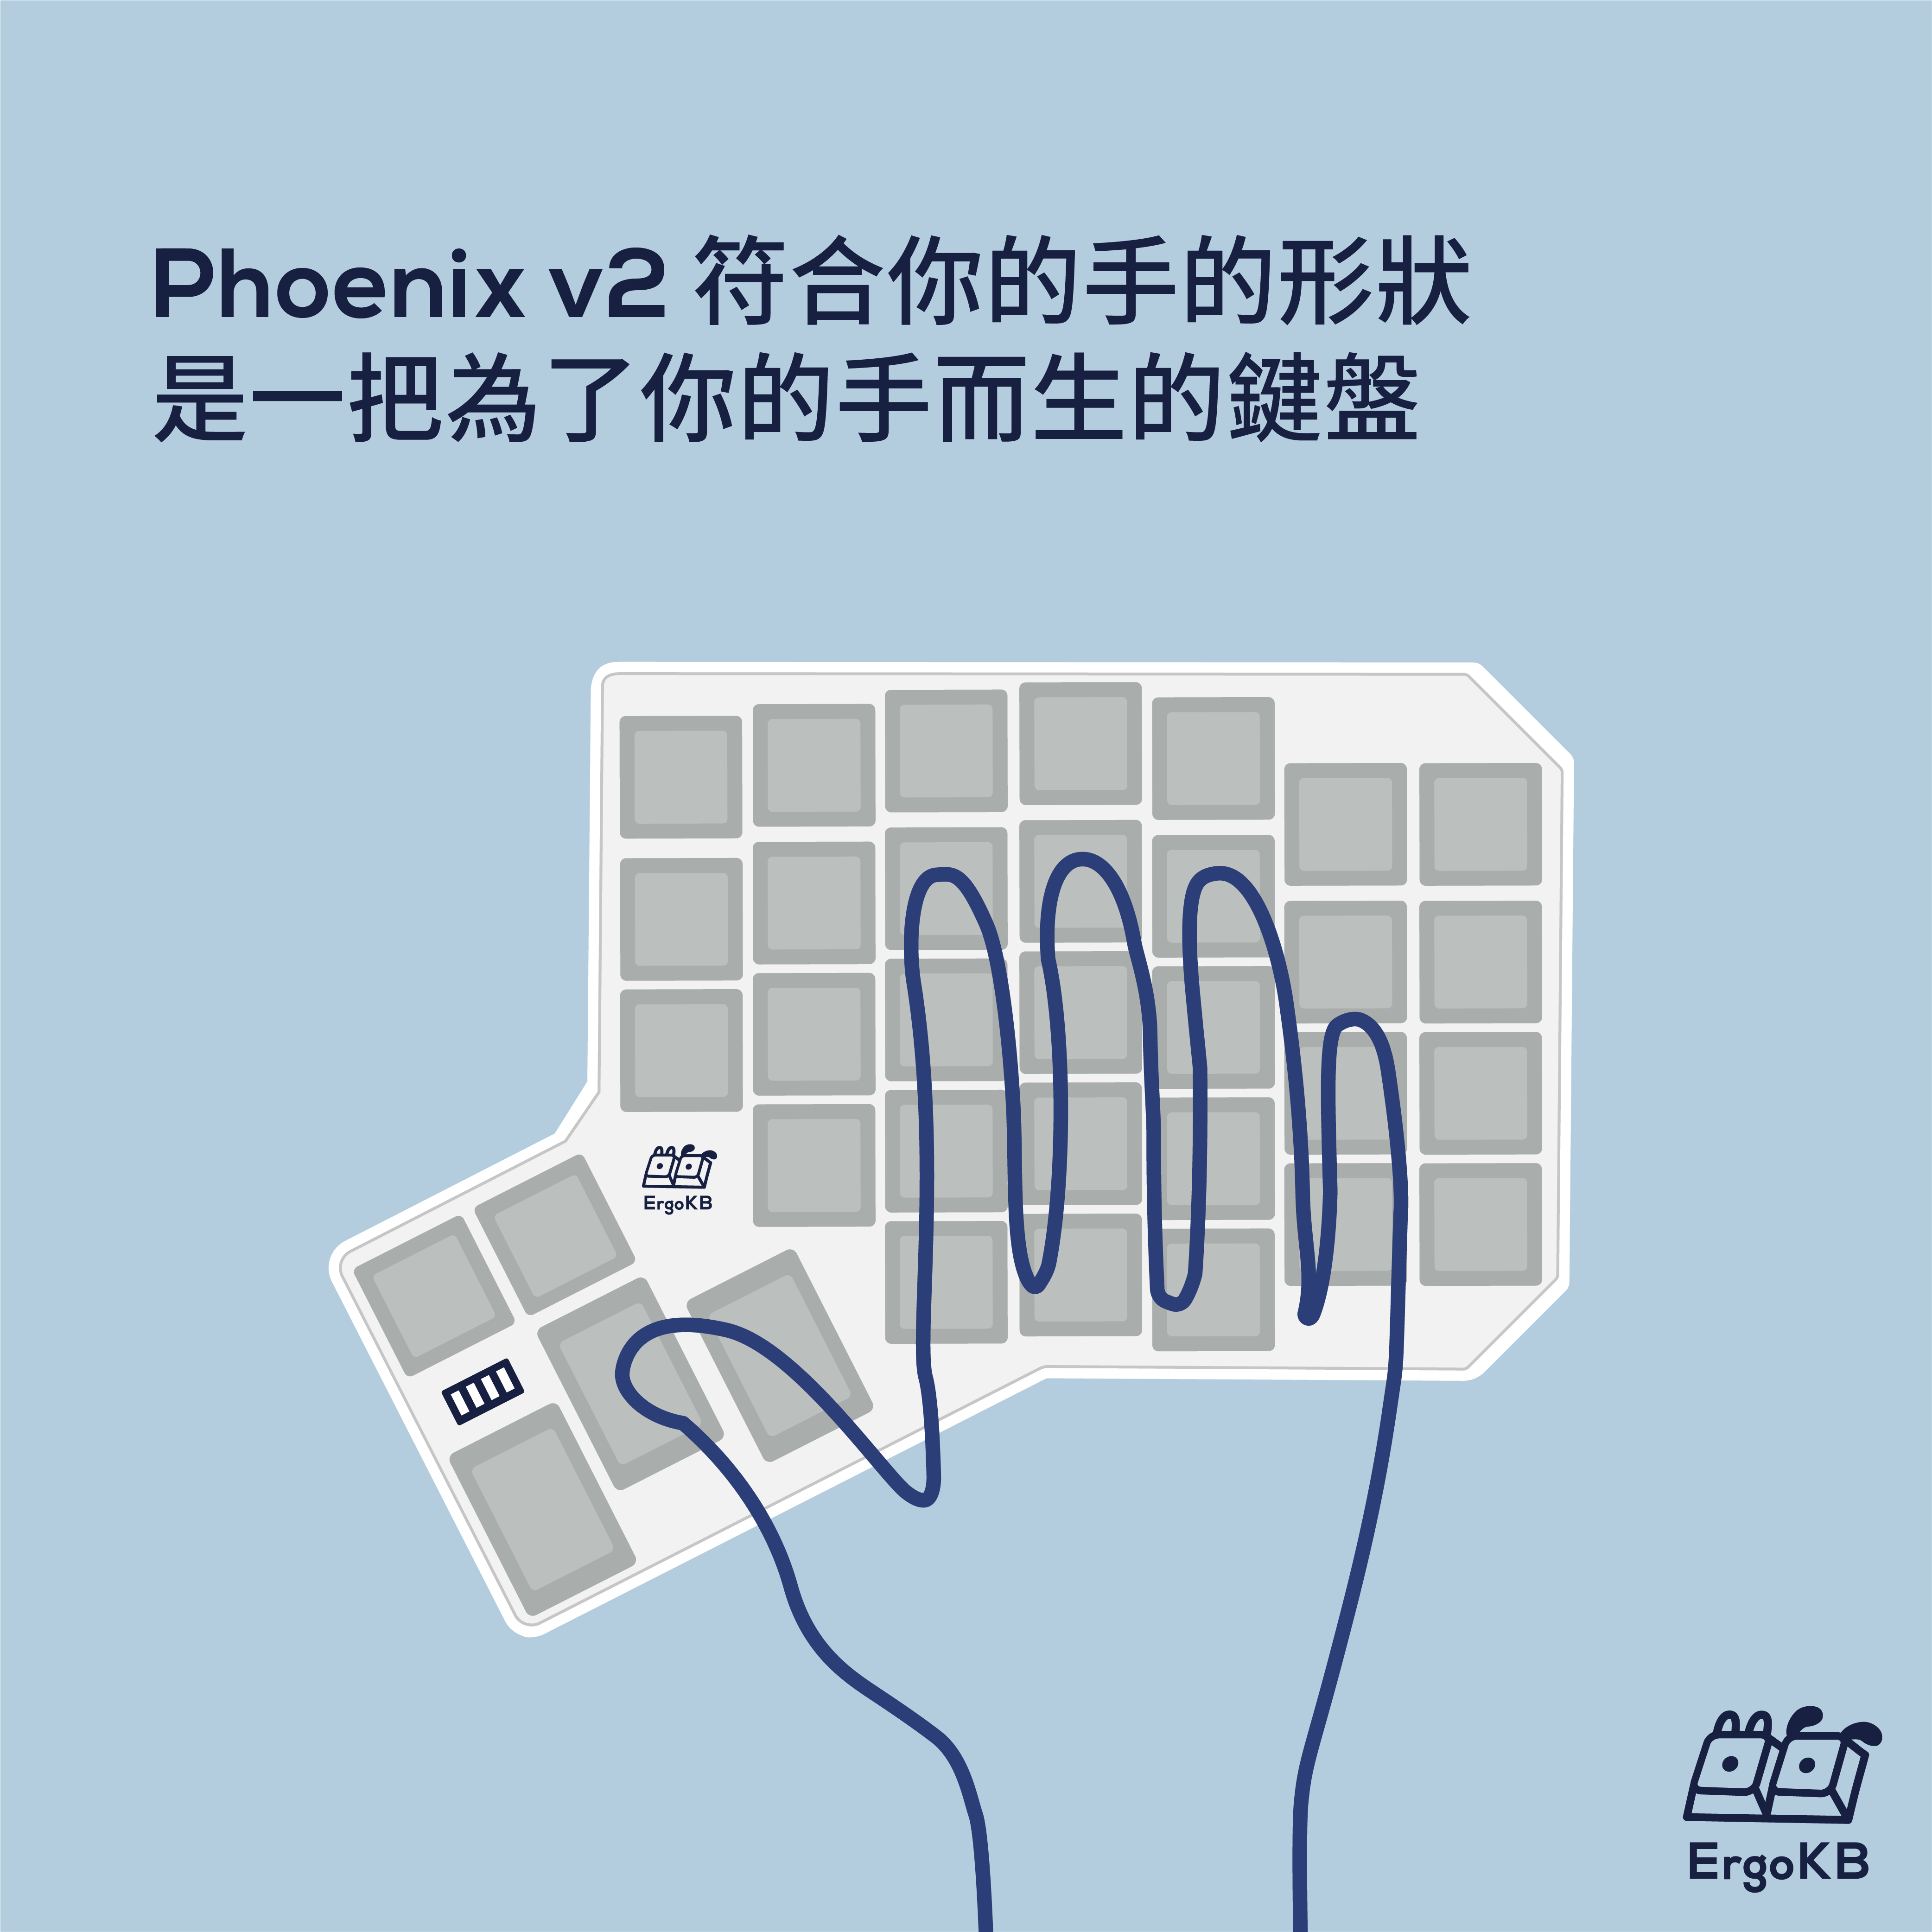 Phoenix 符合你的手的形狀，是一把為了你的手而生的鍵盤